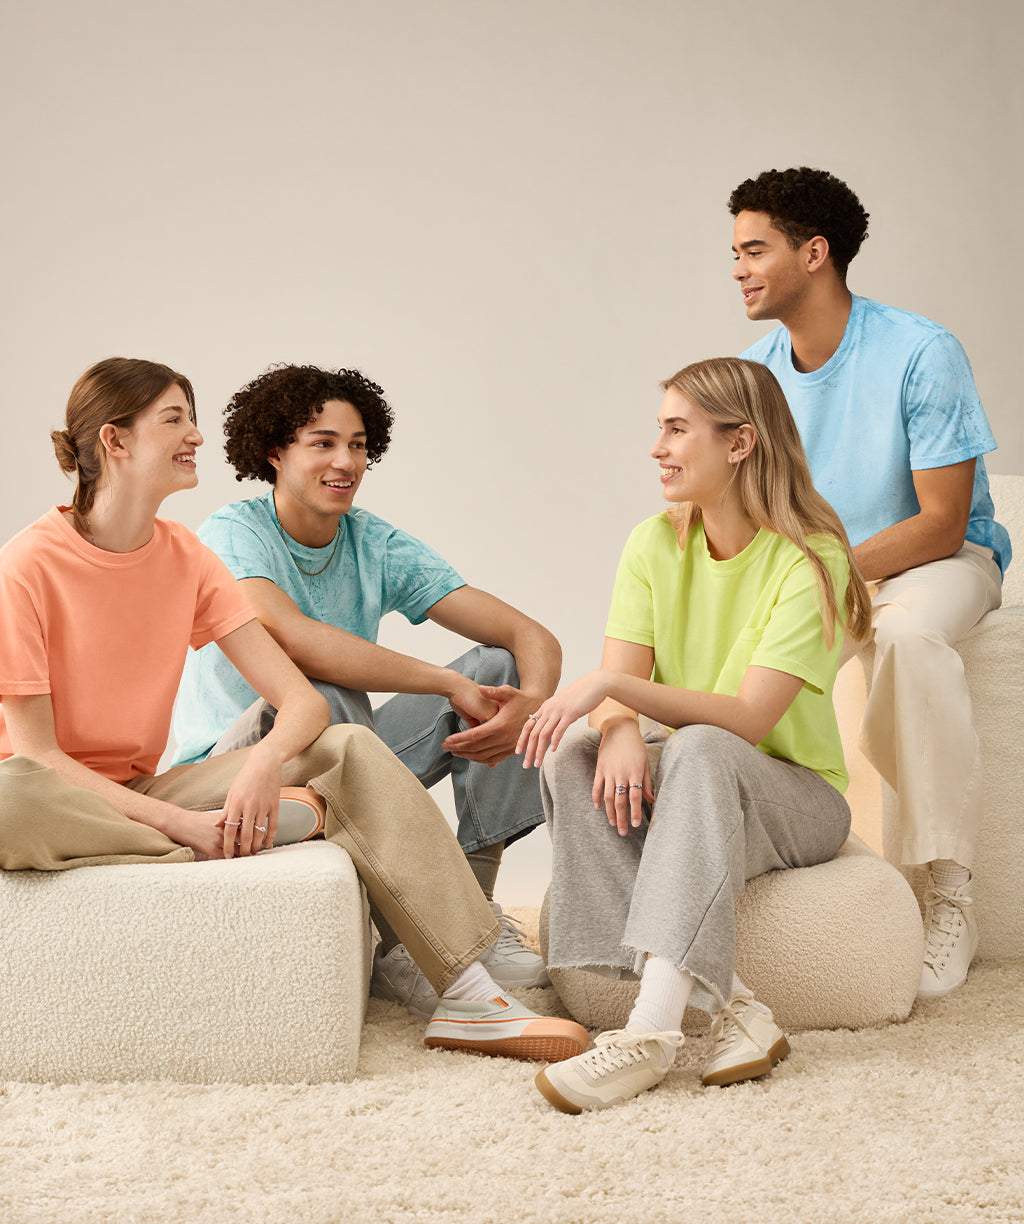 80+ Custom Screen Printed Comfort Colors 1717 Garment Dyed Tshirts